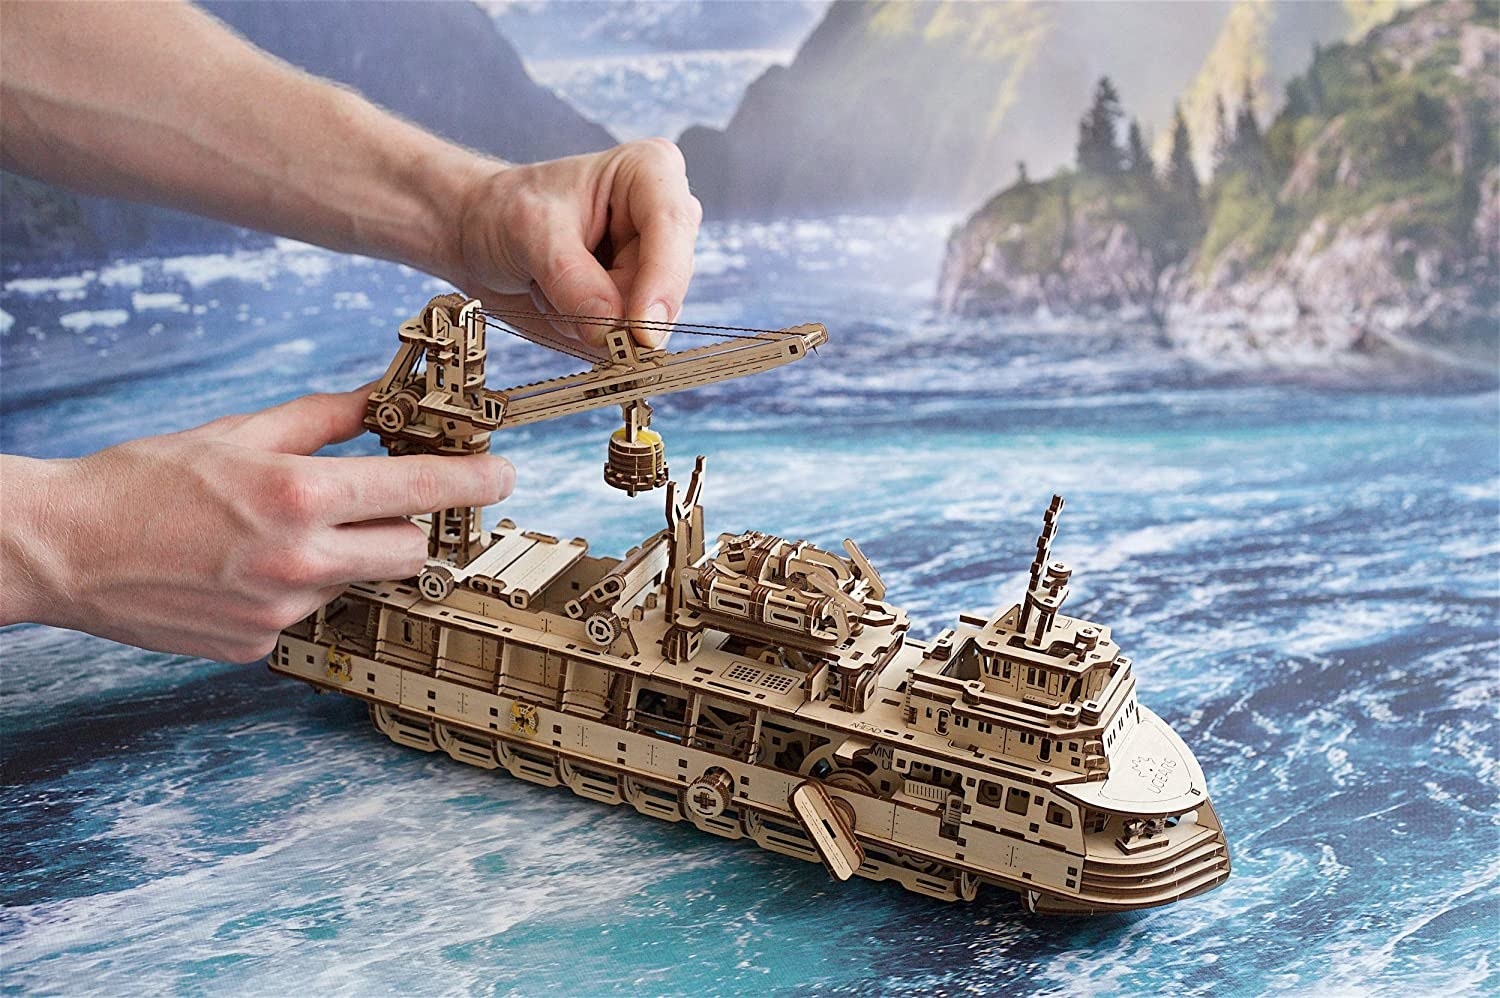 A 3D ship model puzzle